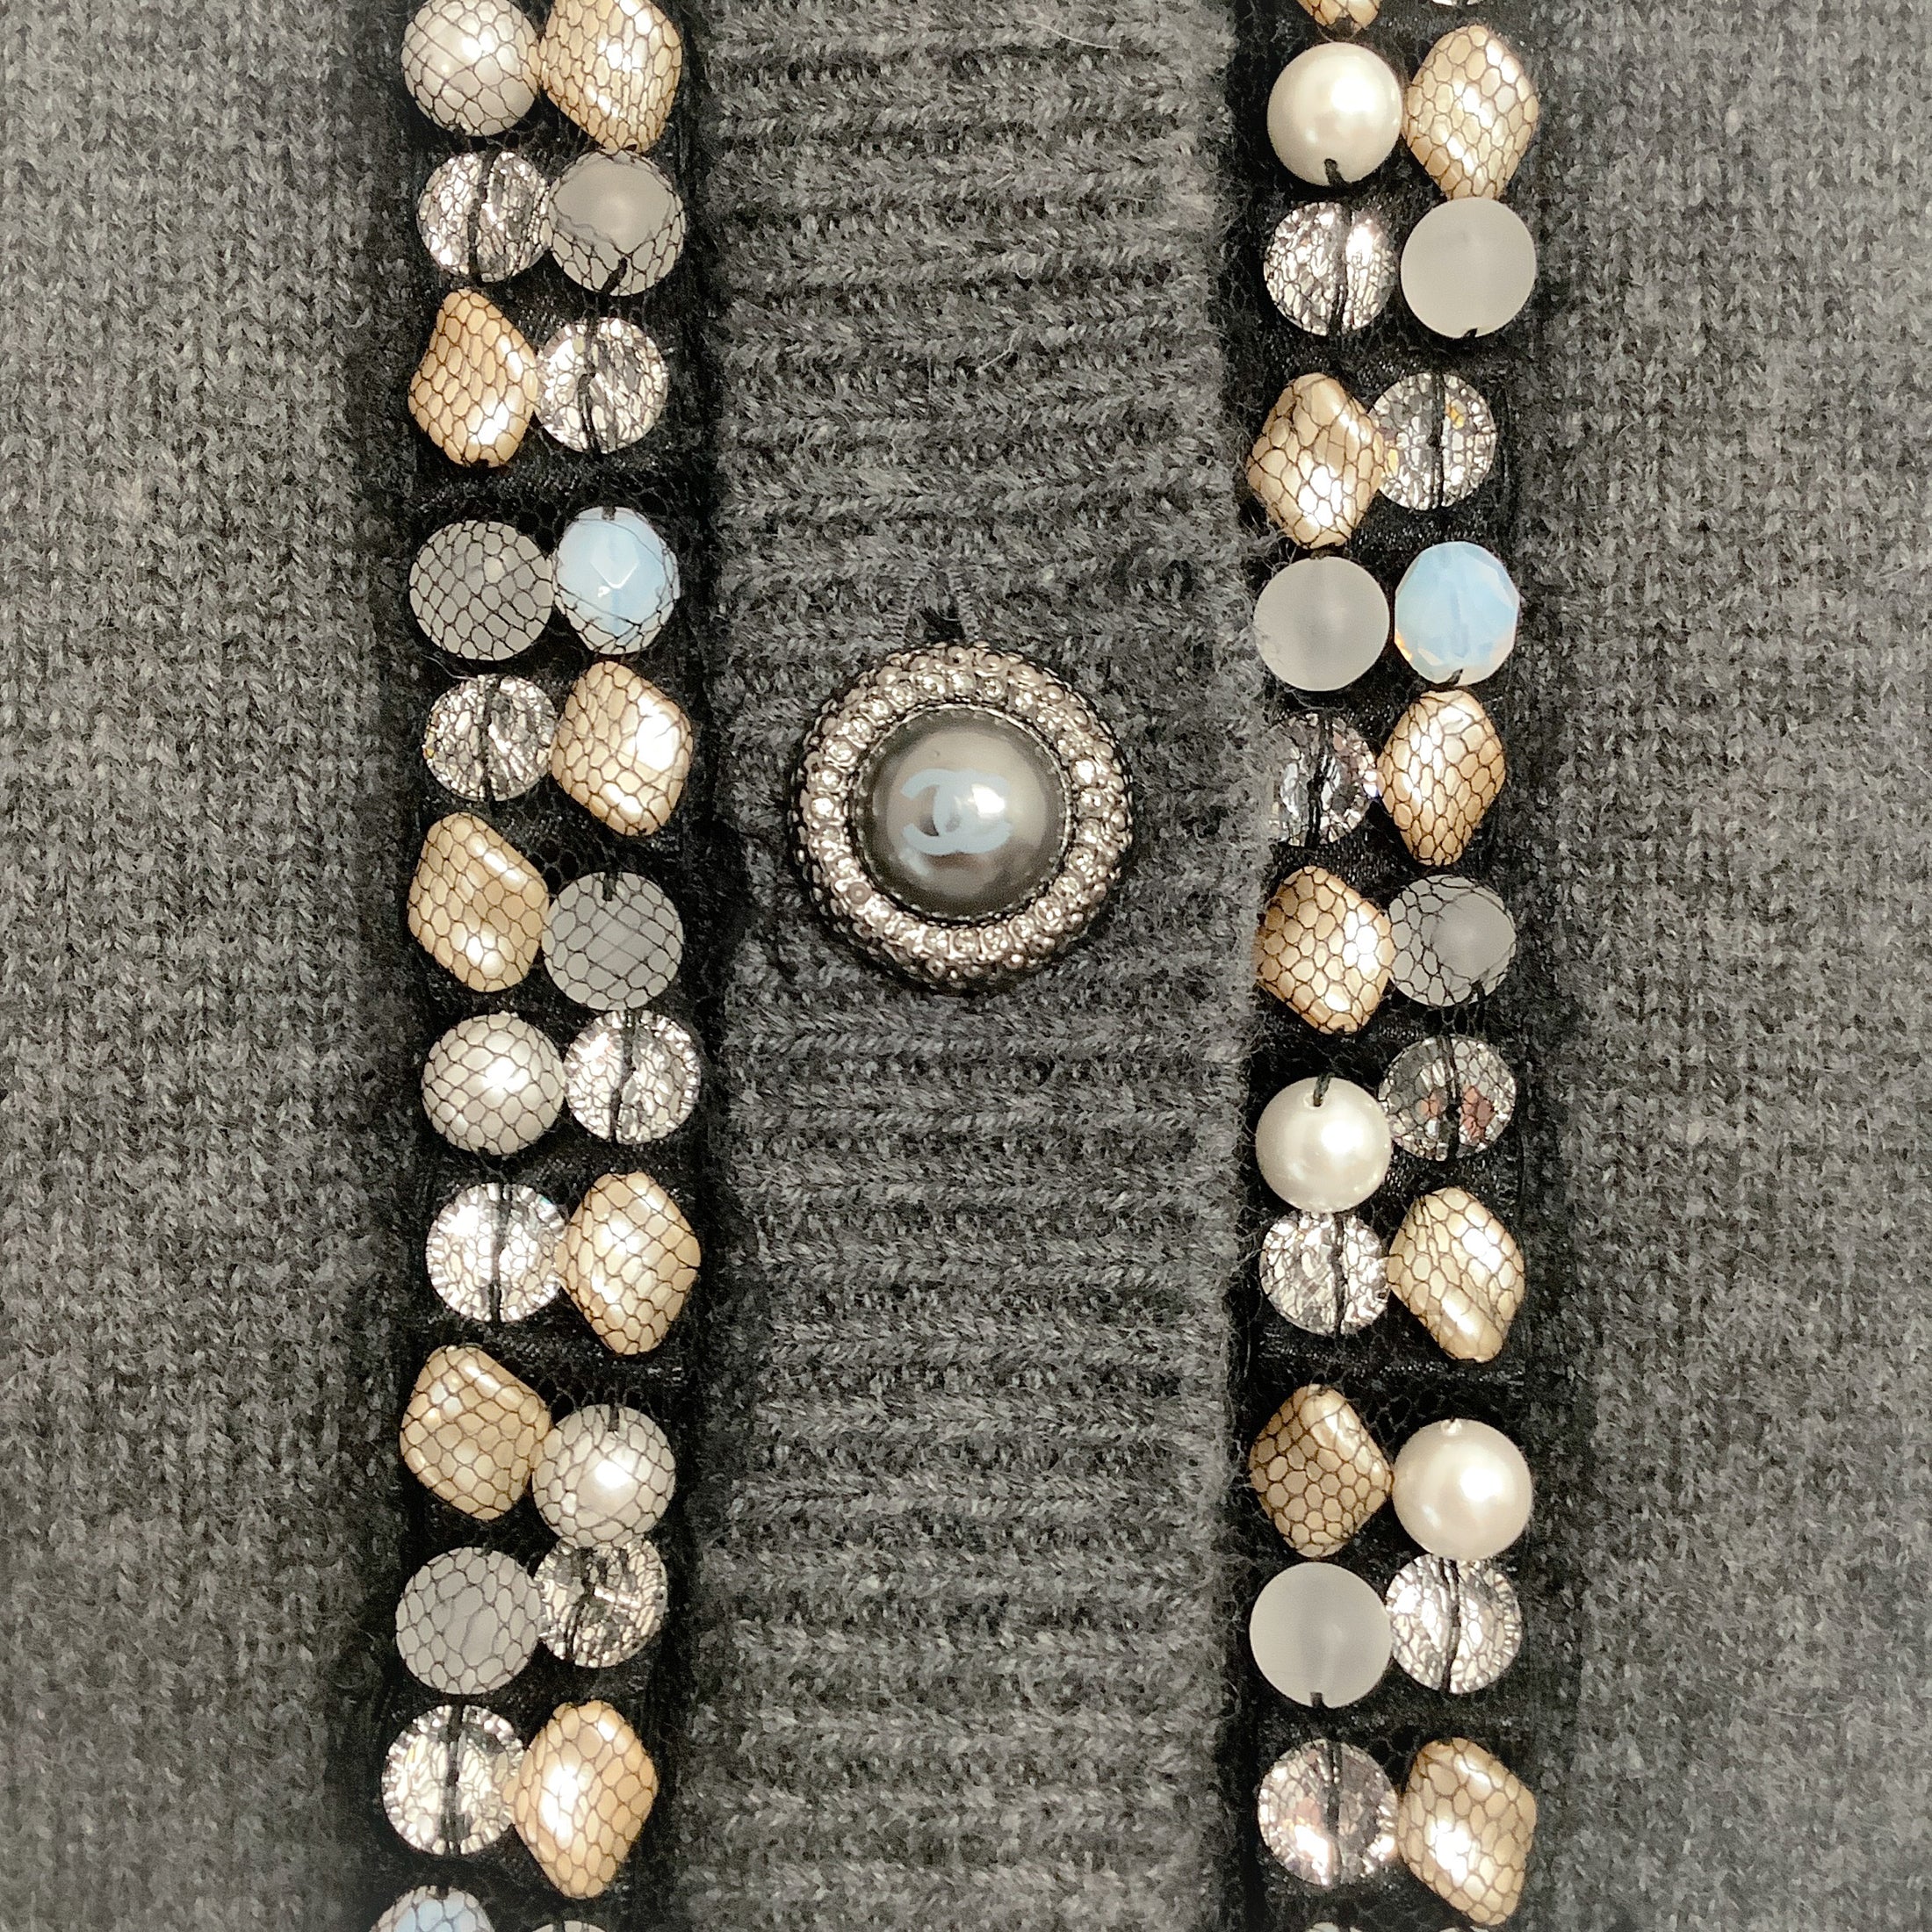 Chanel Pearl / Bead Trim Cashmere Cardigan Grey Sweater